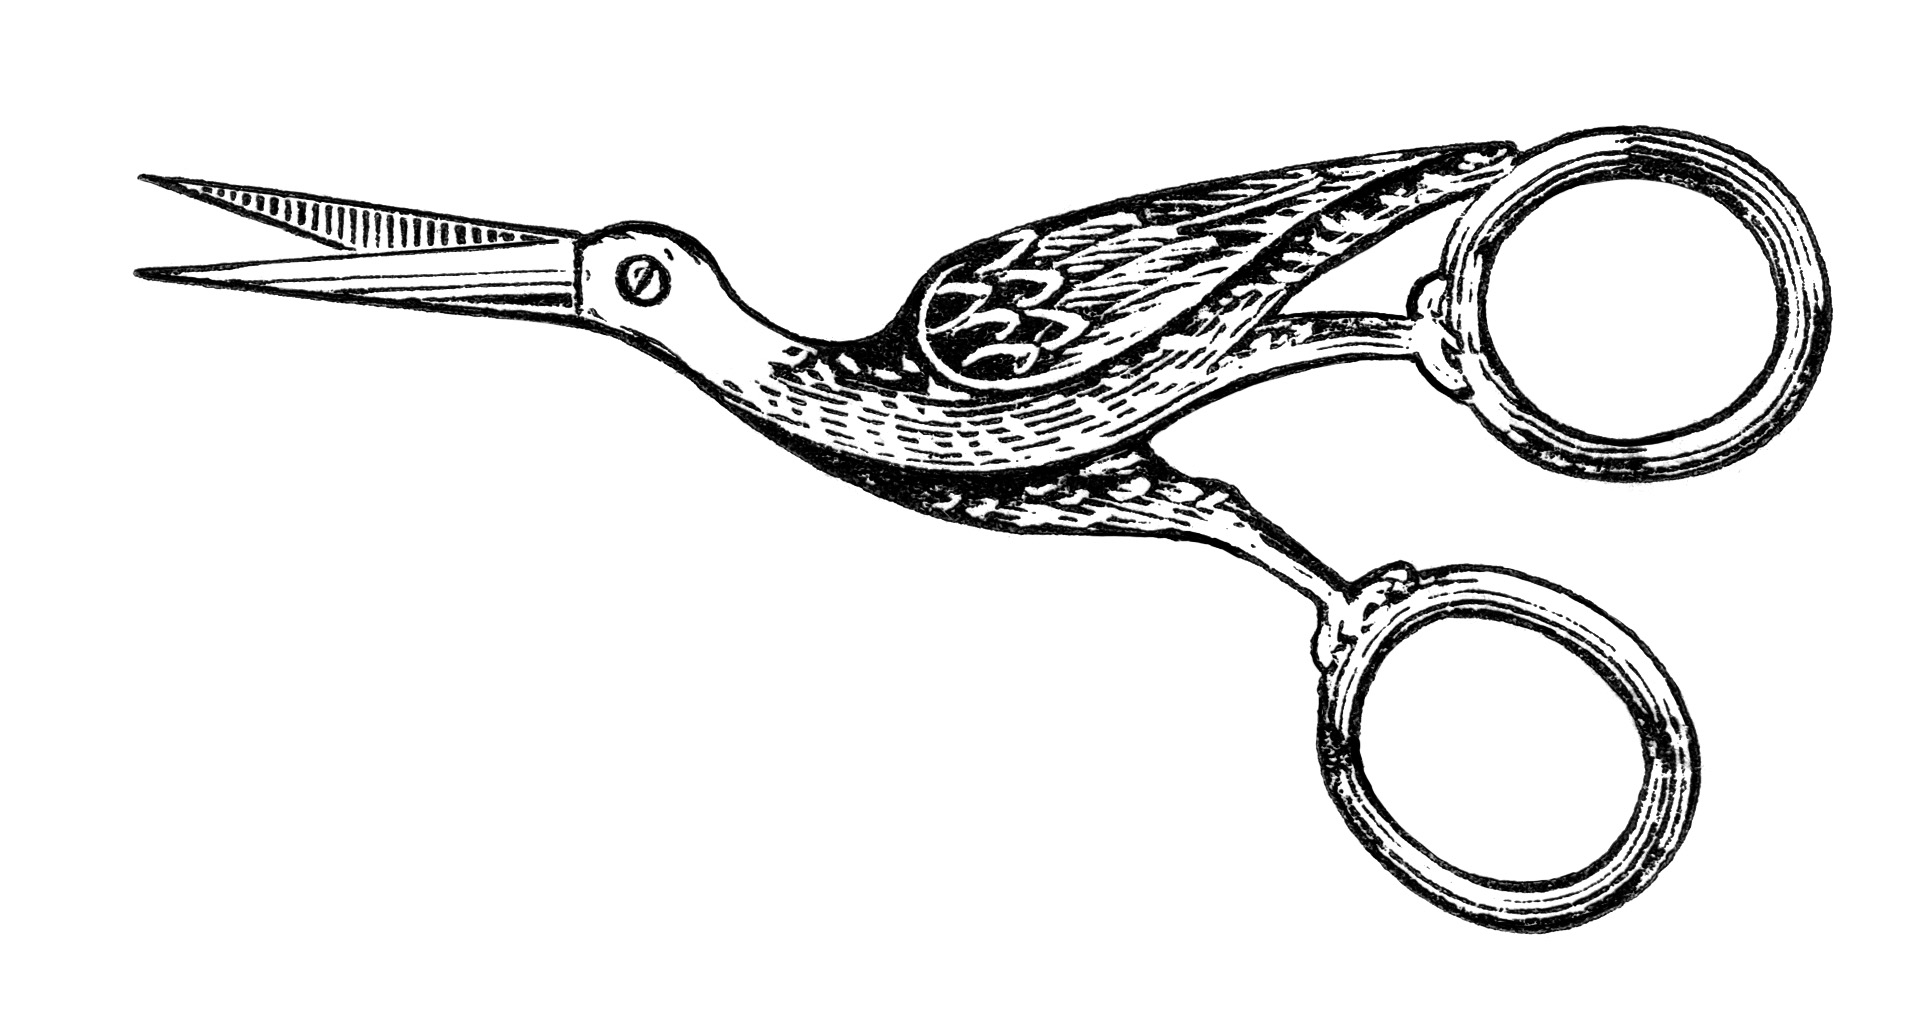 Unique Bird Design Embroidery Scissors Clip Art | Old Design Shop Blog